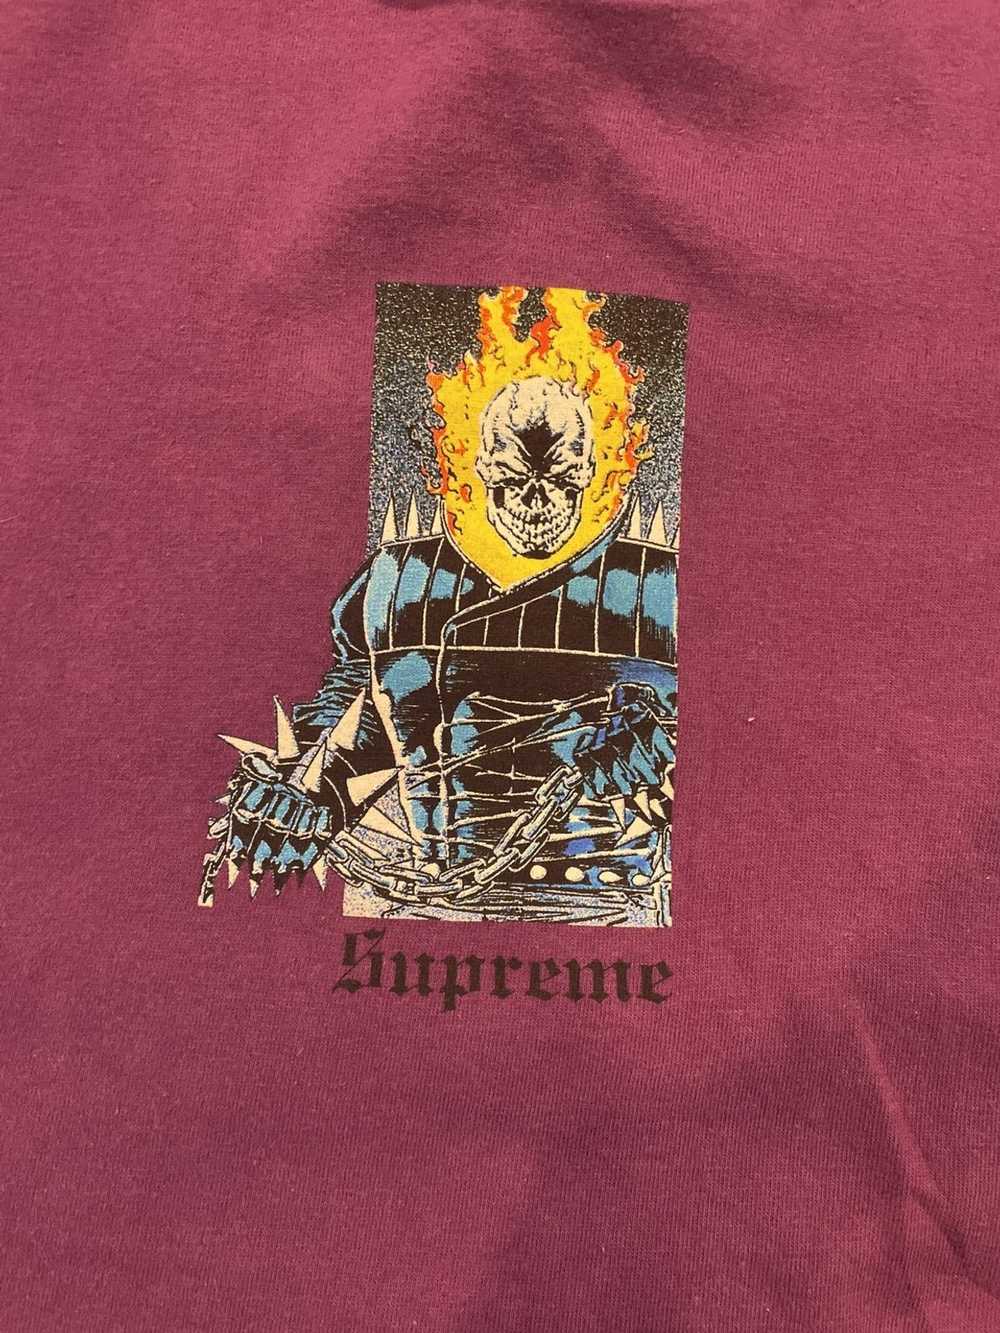 Supreme Supreme ghost rider shirt - image 2